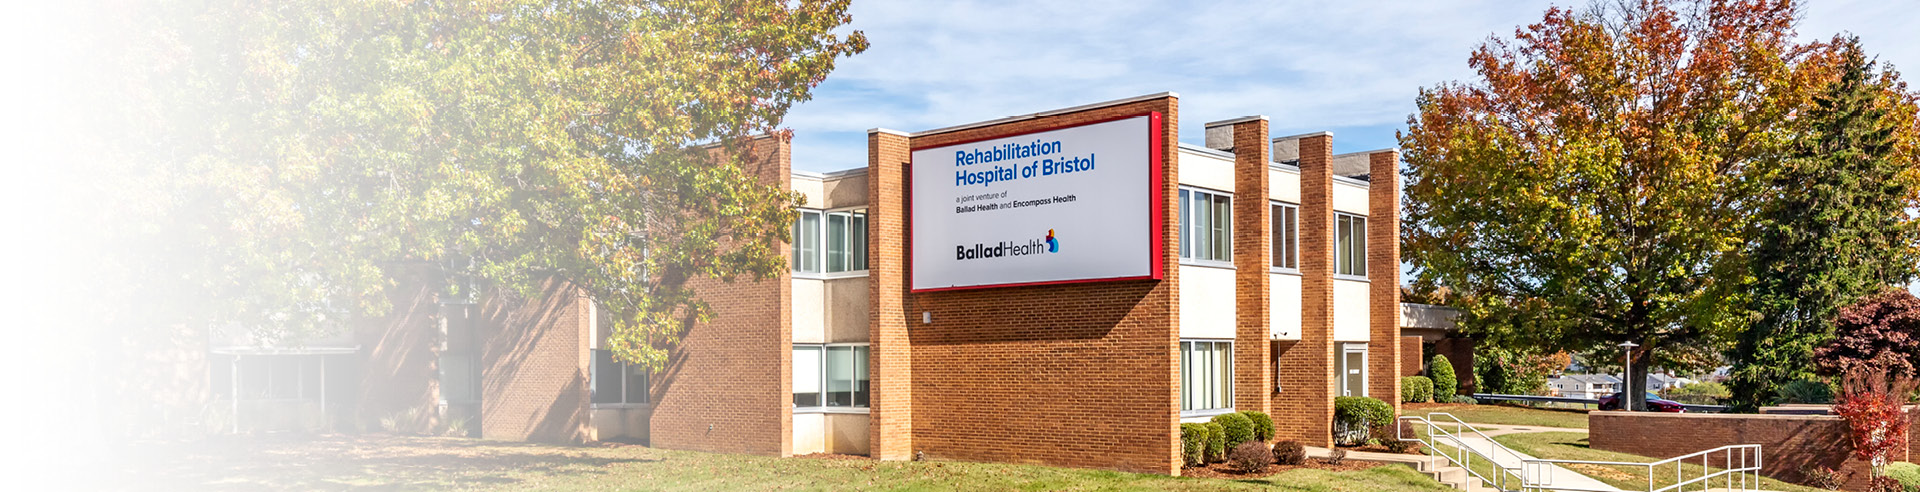 Rehabilitation Hospital of Bristol exterior